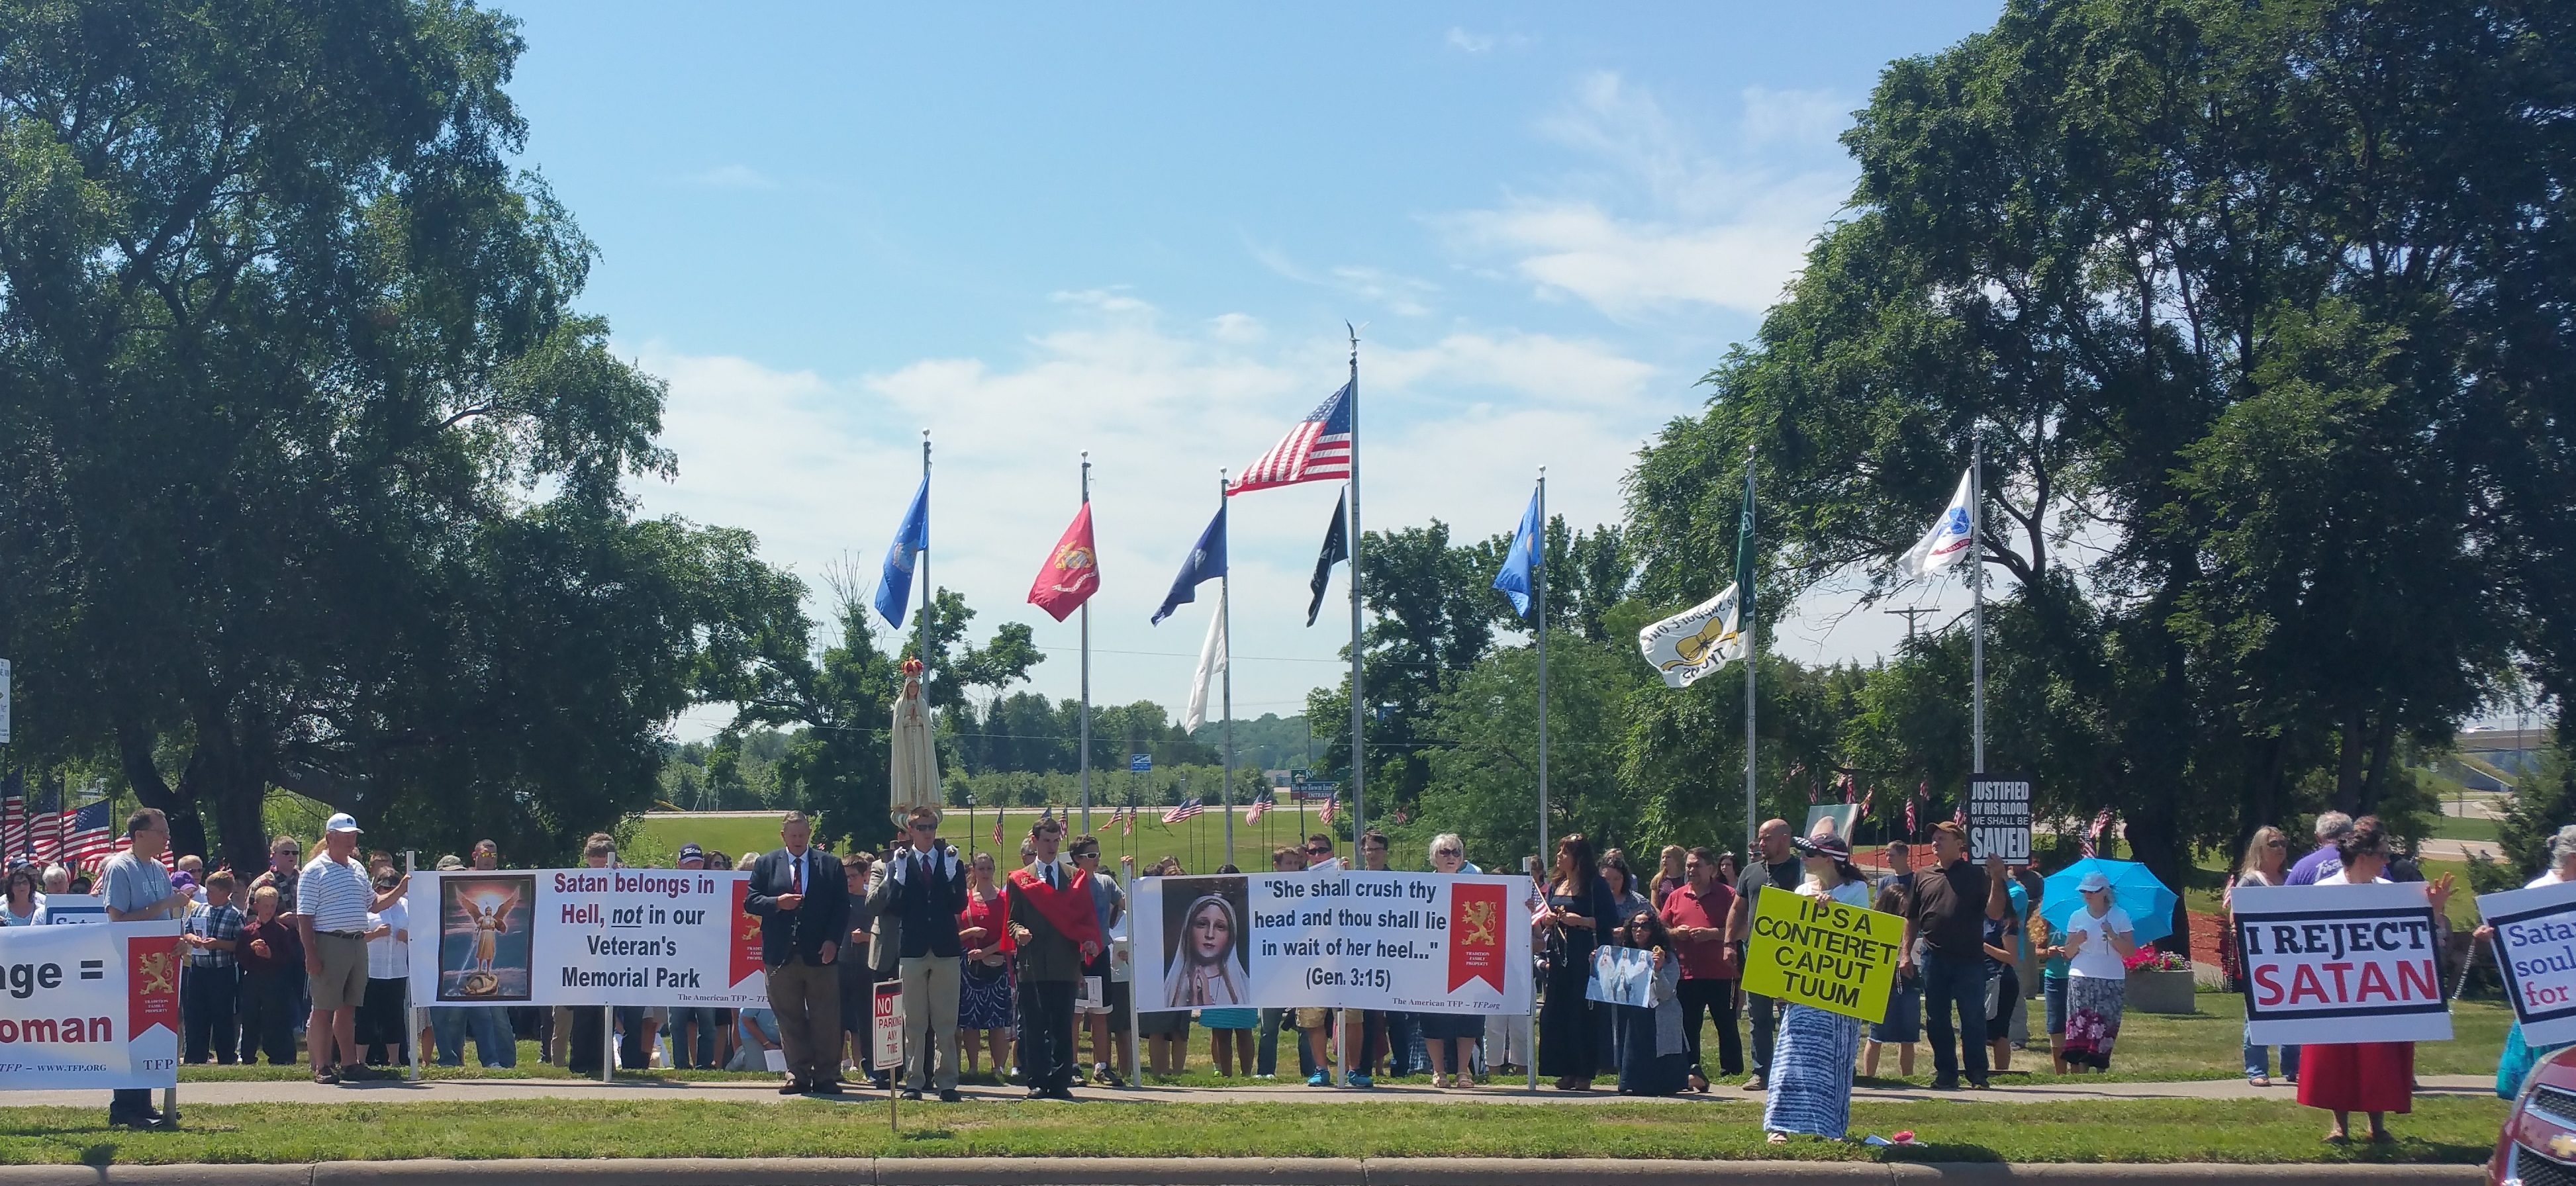 Catholics Reject Satan Monument in Belle Plaine, Minnesota